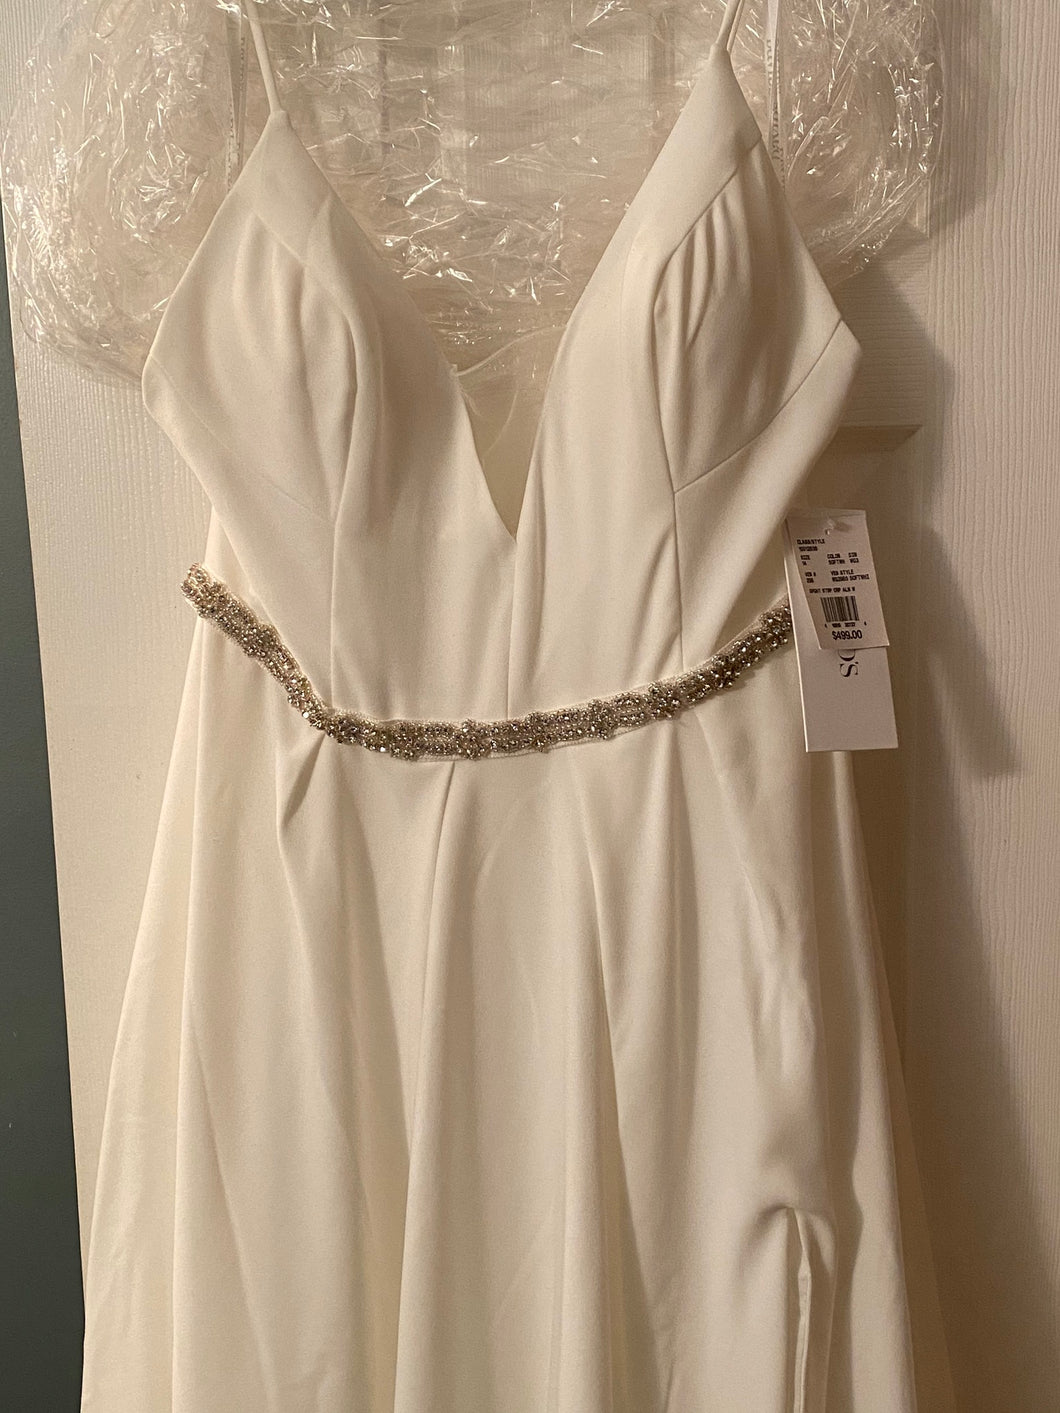 David's Bridal 'WG3985 Soft whi' wedding dress size-14 NEW